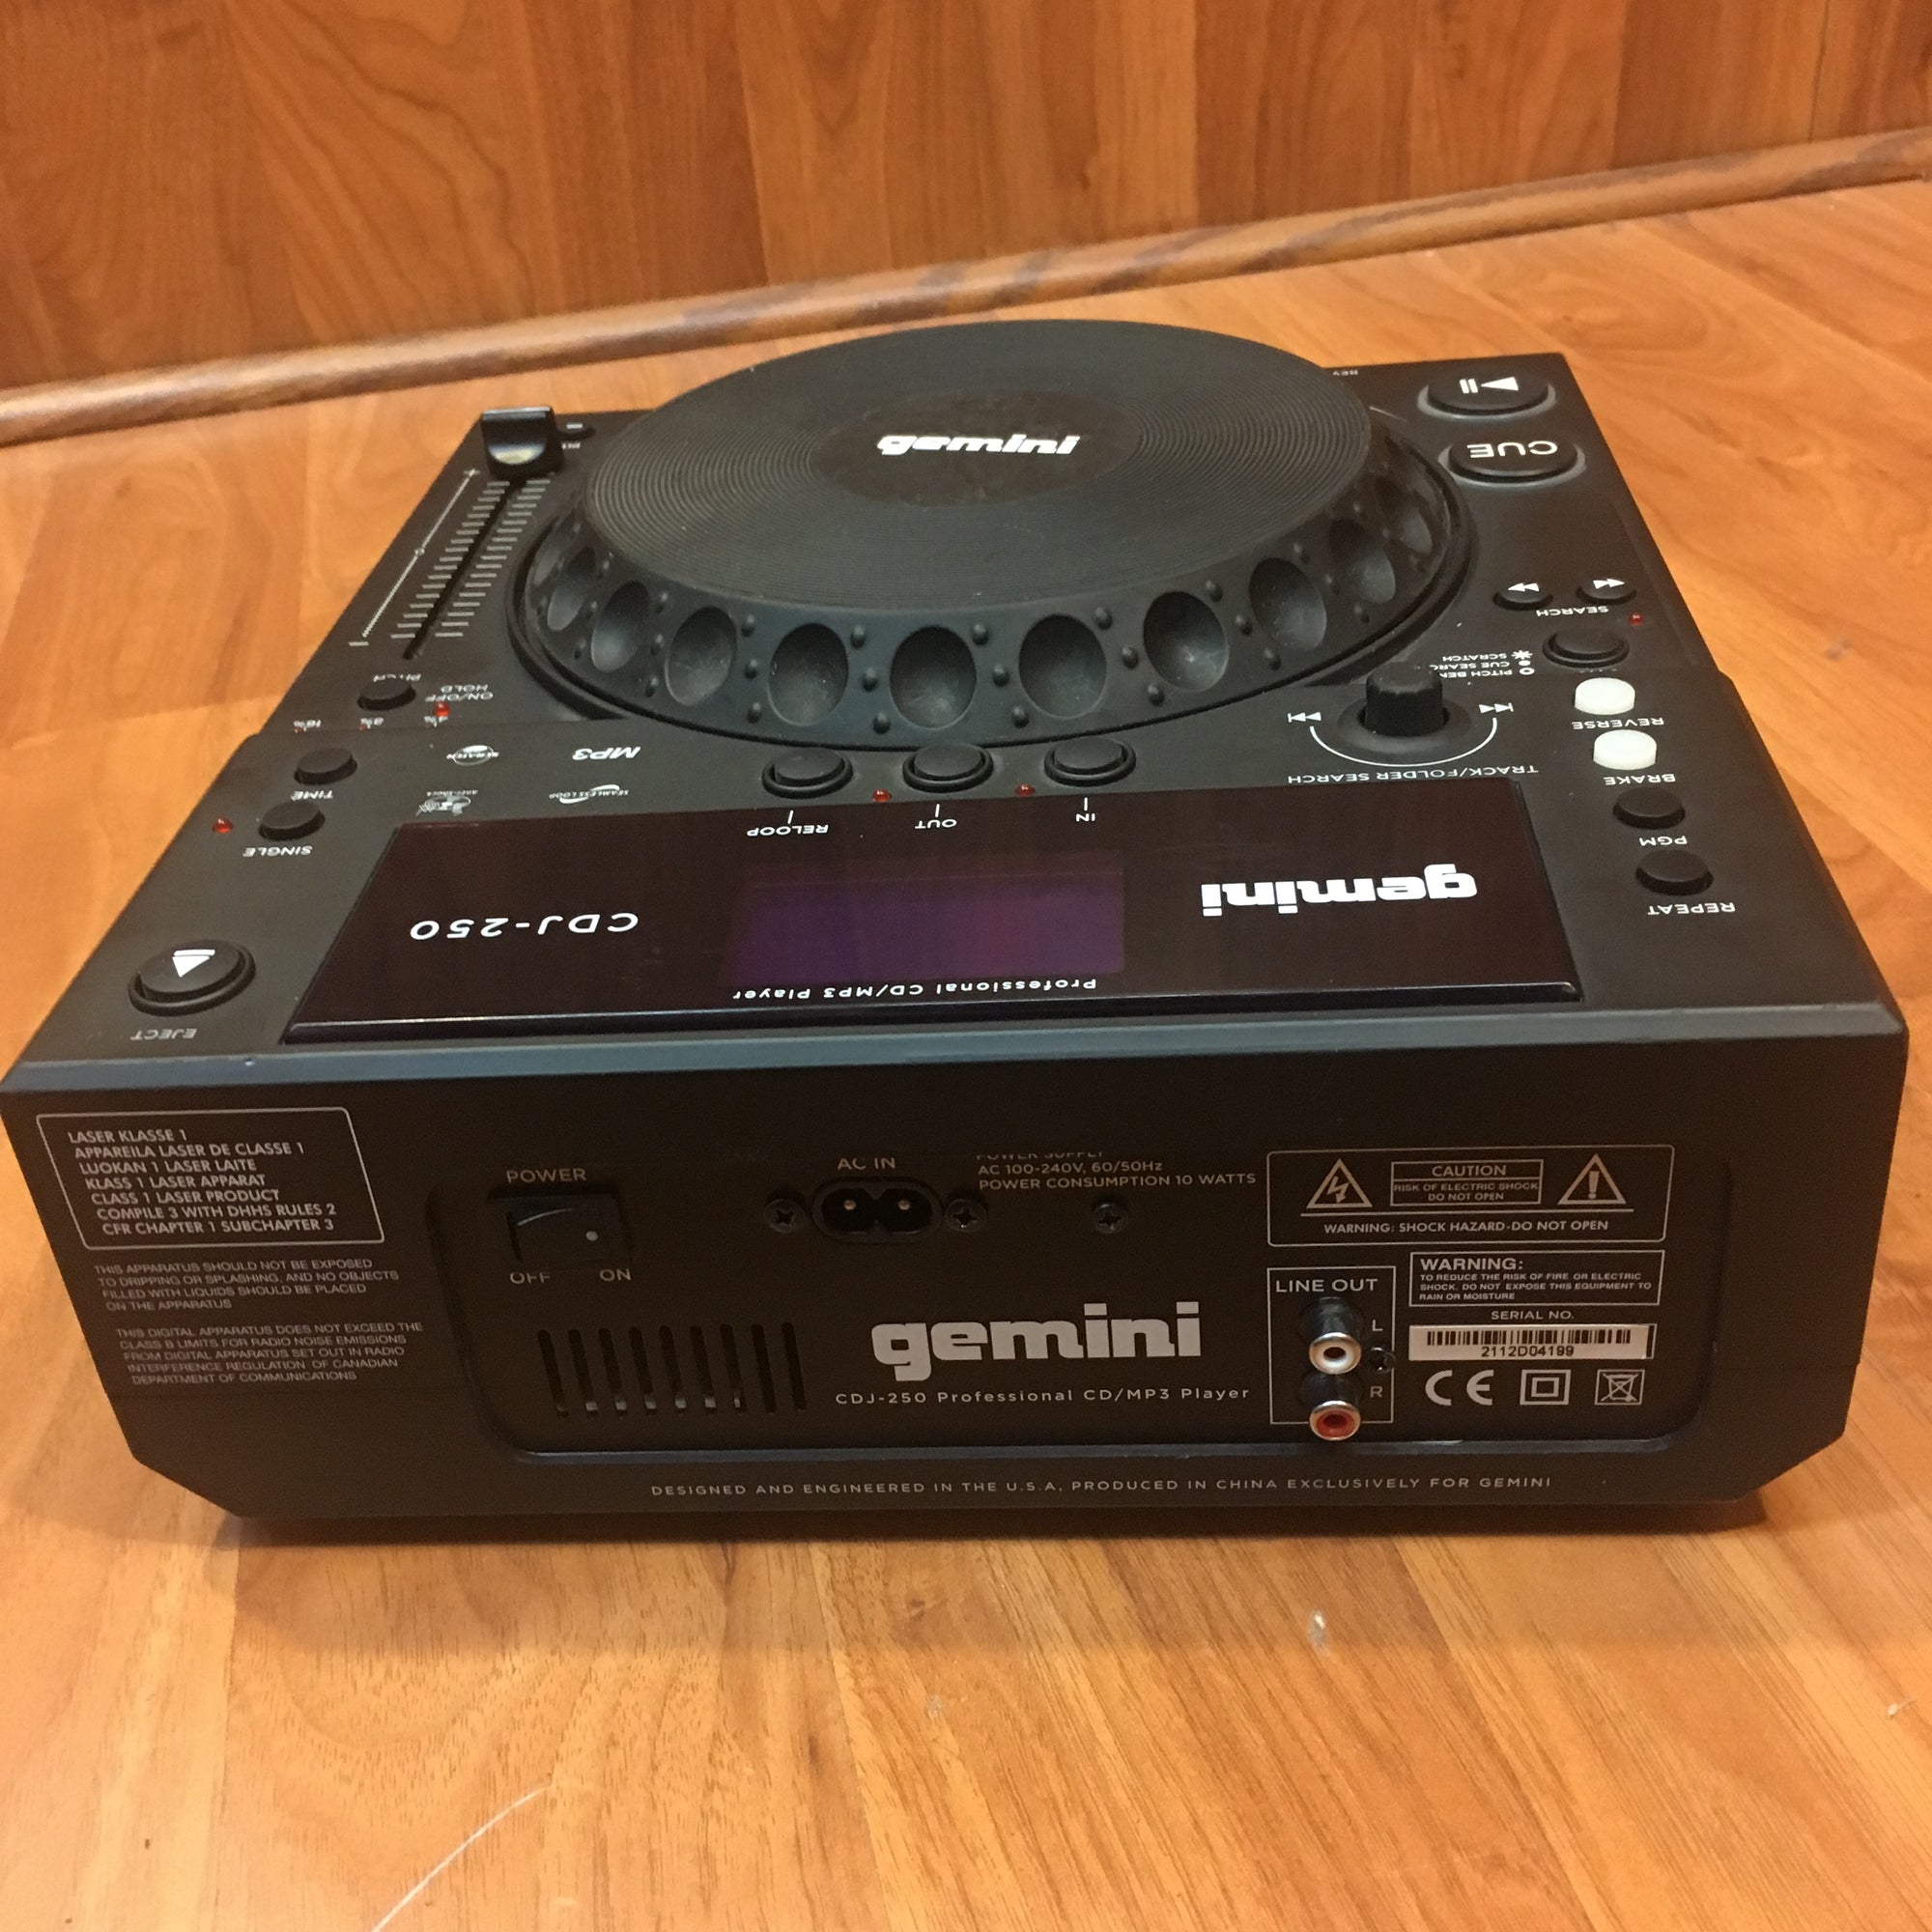 CDJ Gemini 250 Professional CD/MP3 Player/Turntable - Evolution Music